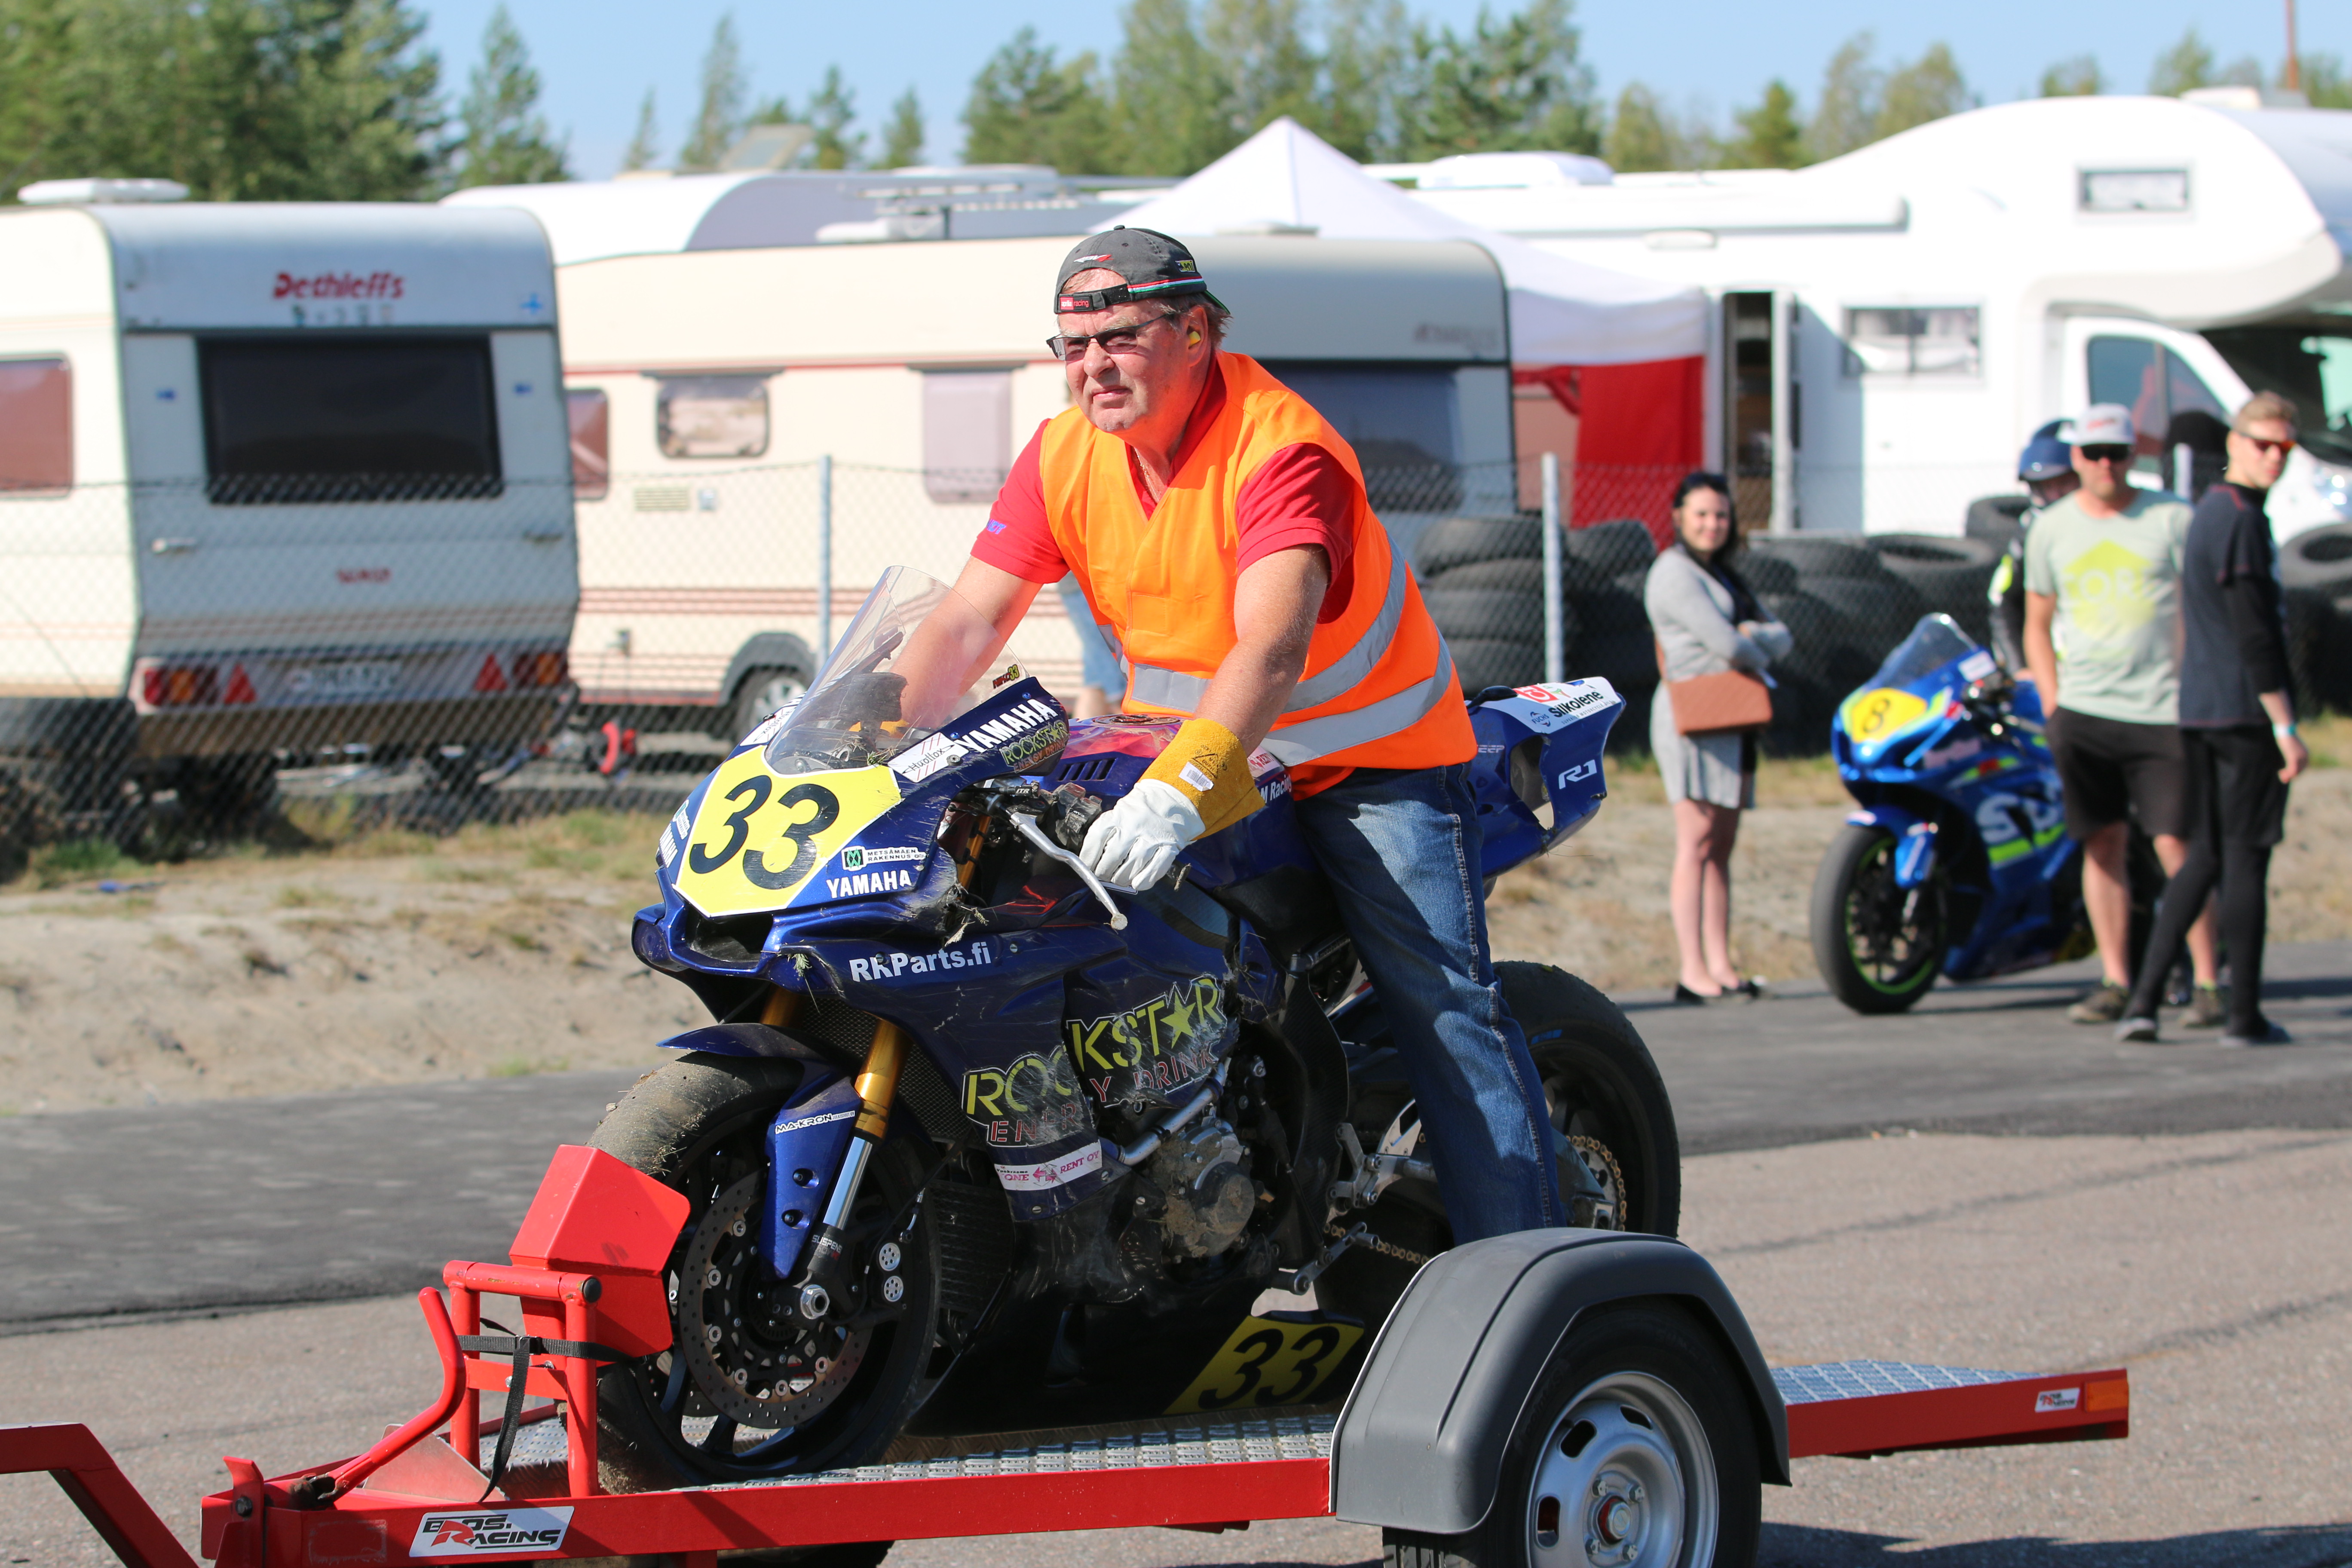 Niko Mäkinen - Superbike